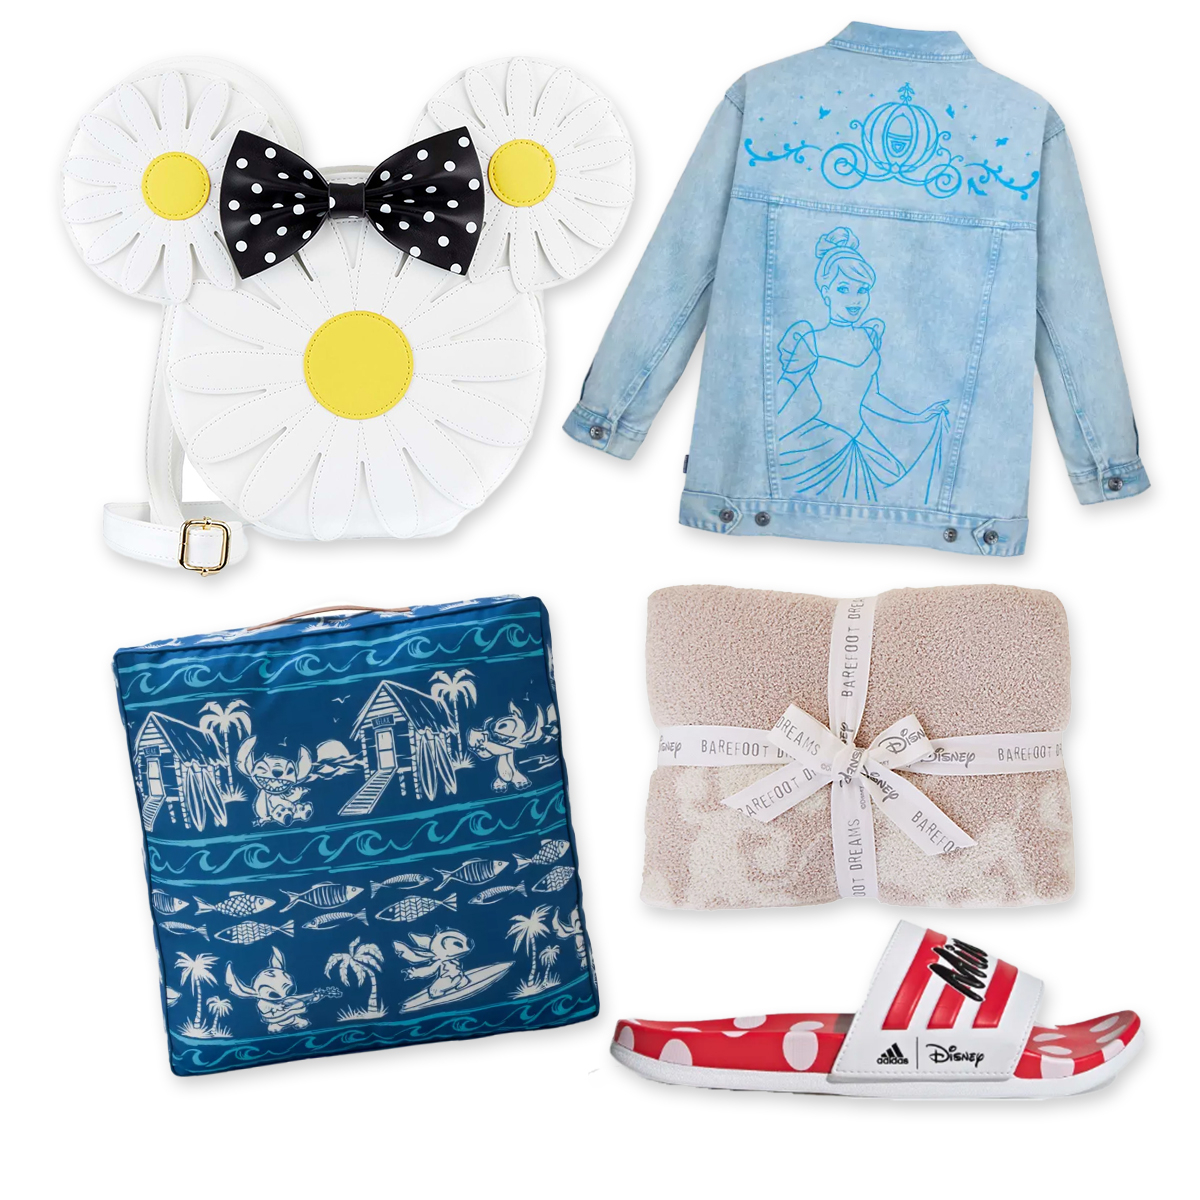 Top Disney Mother's Day Gifts for Disney Loving Moms - Disney Dream Co